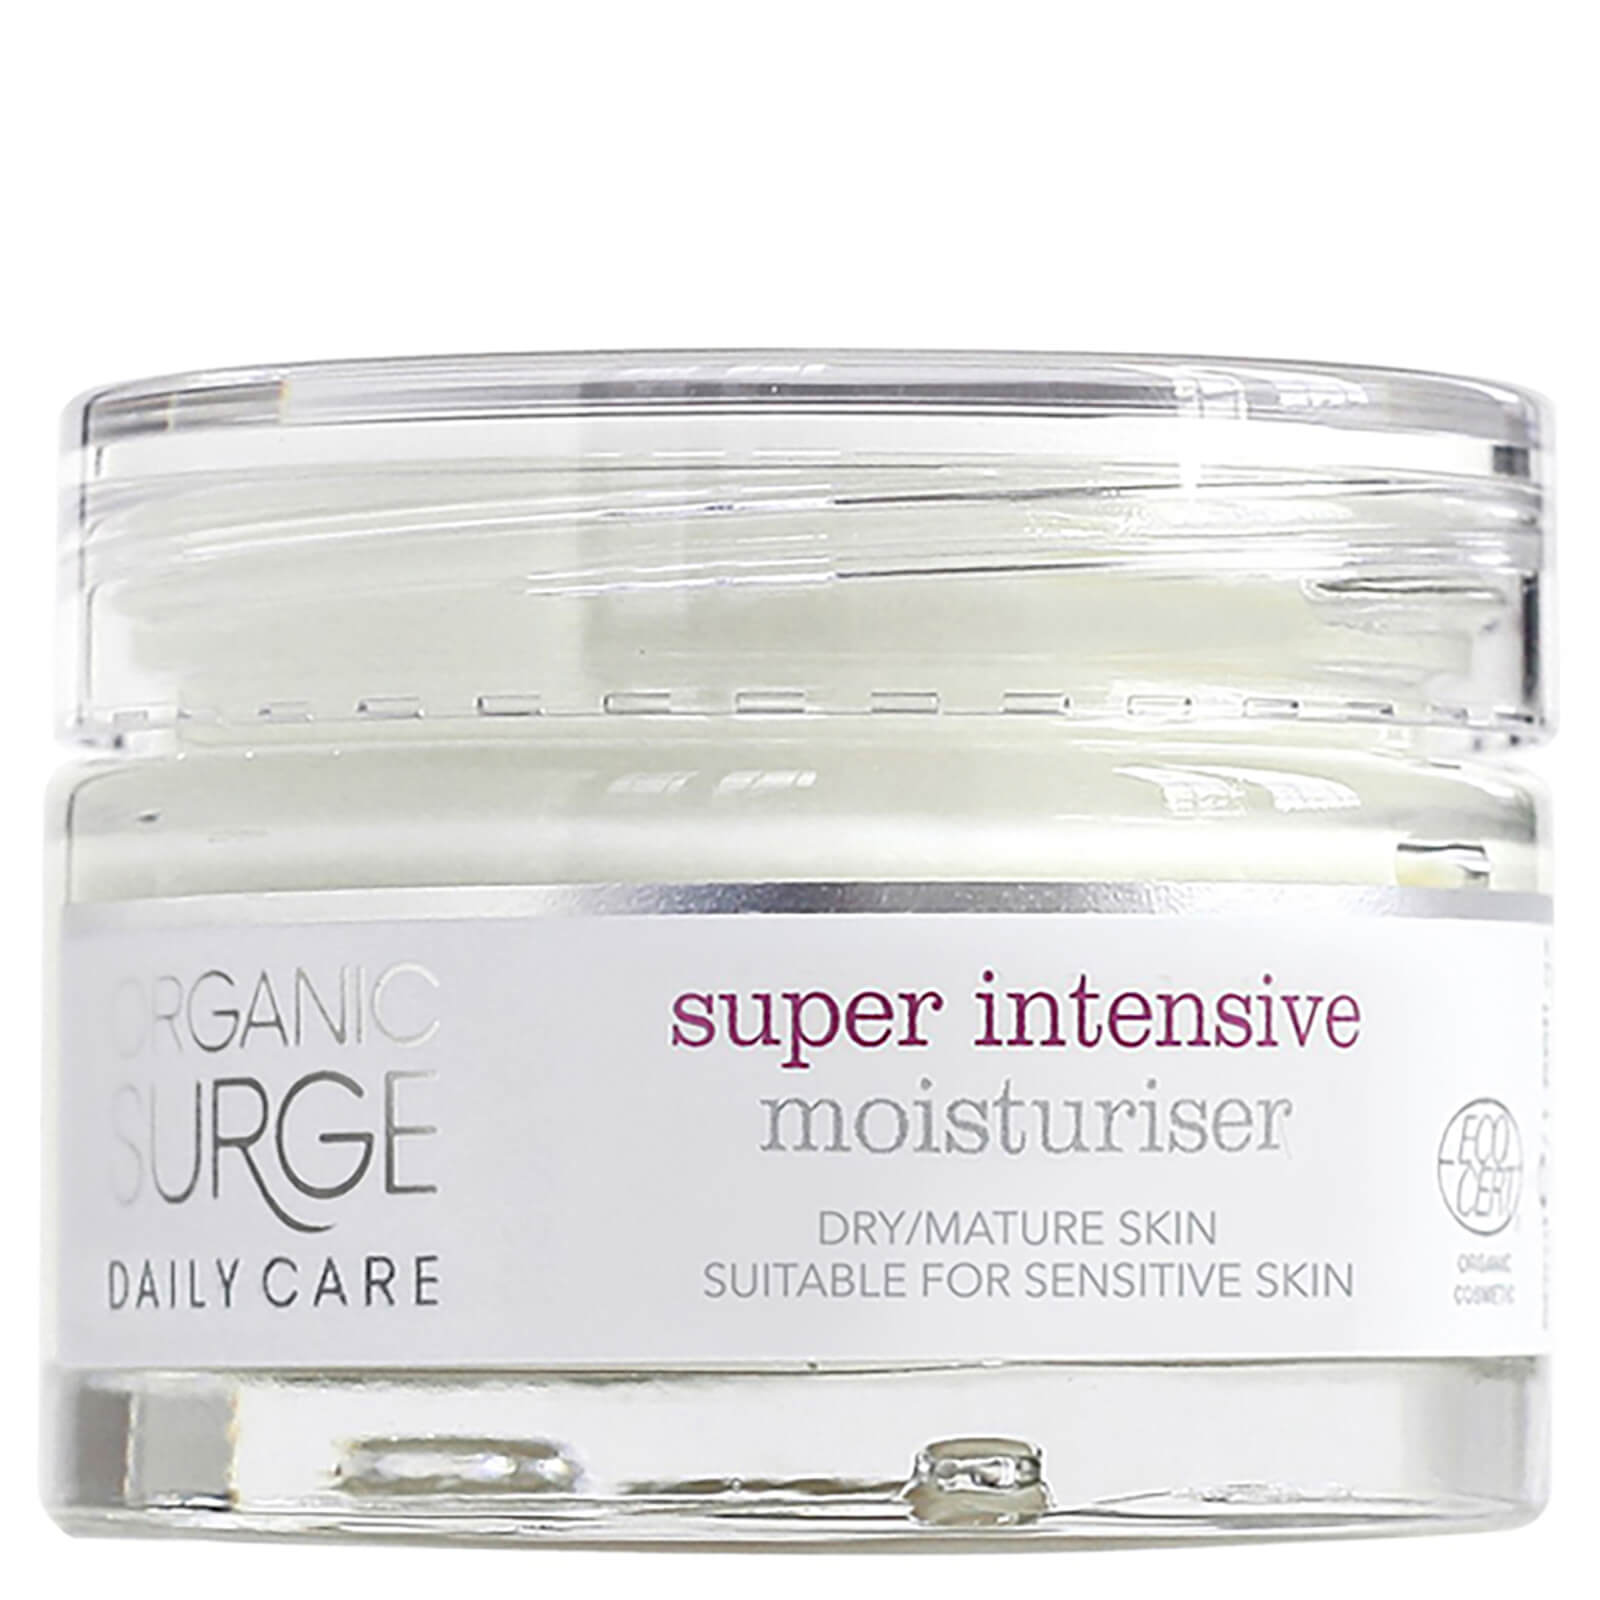 Crema hidratante super intensiva Daily Care Super Intensive Moisturiser de Organic Surge (50 ml)